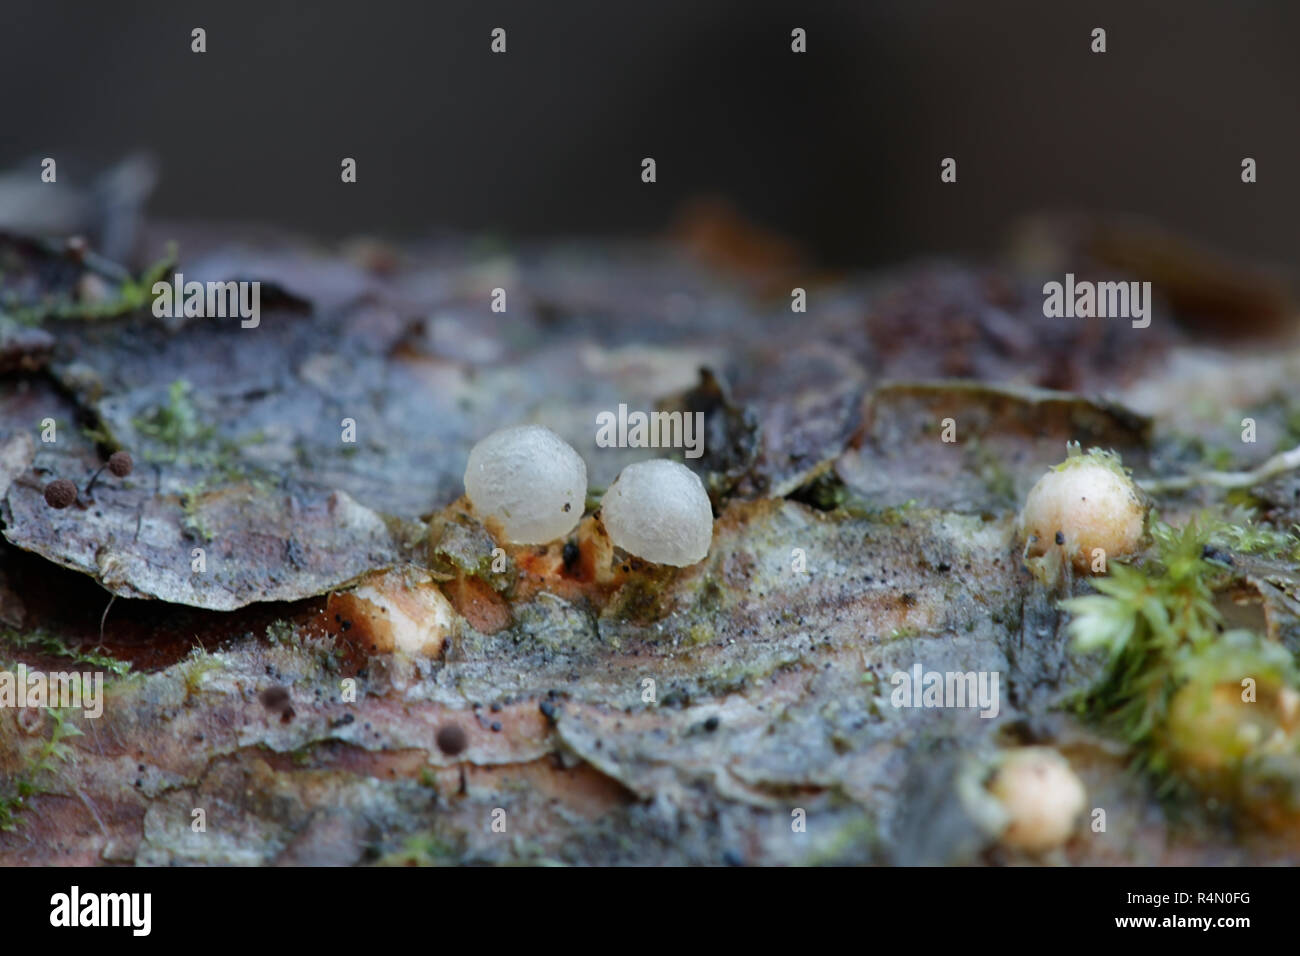 Sphaerobolus stellatus, commonly known as the cannon ball fungus Stock Photo